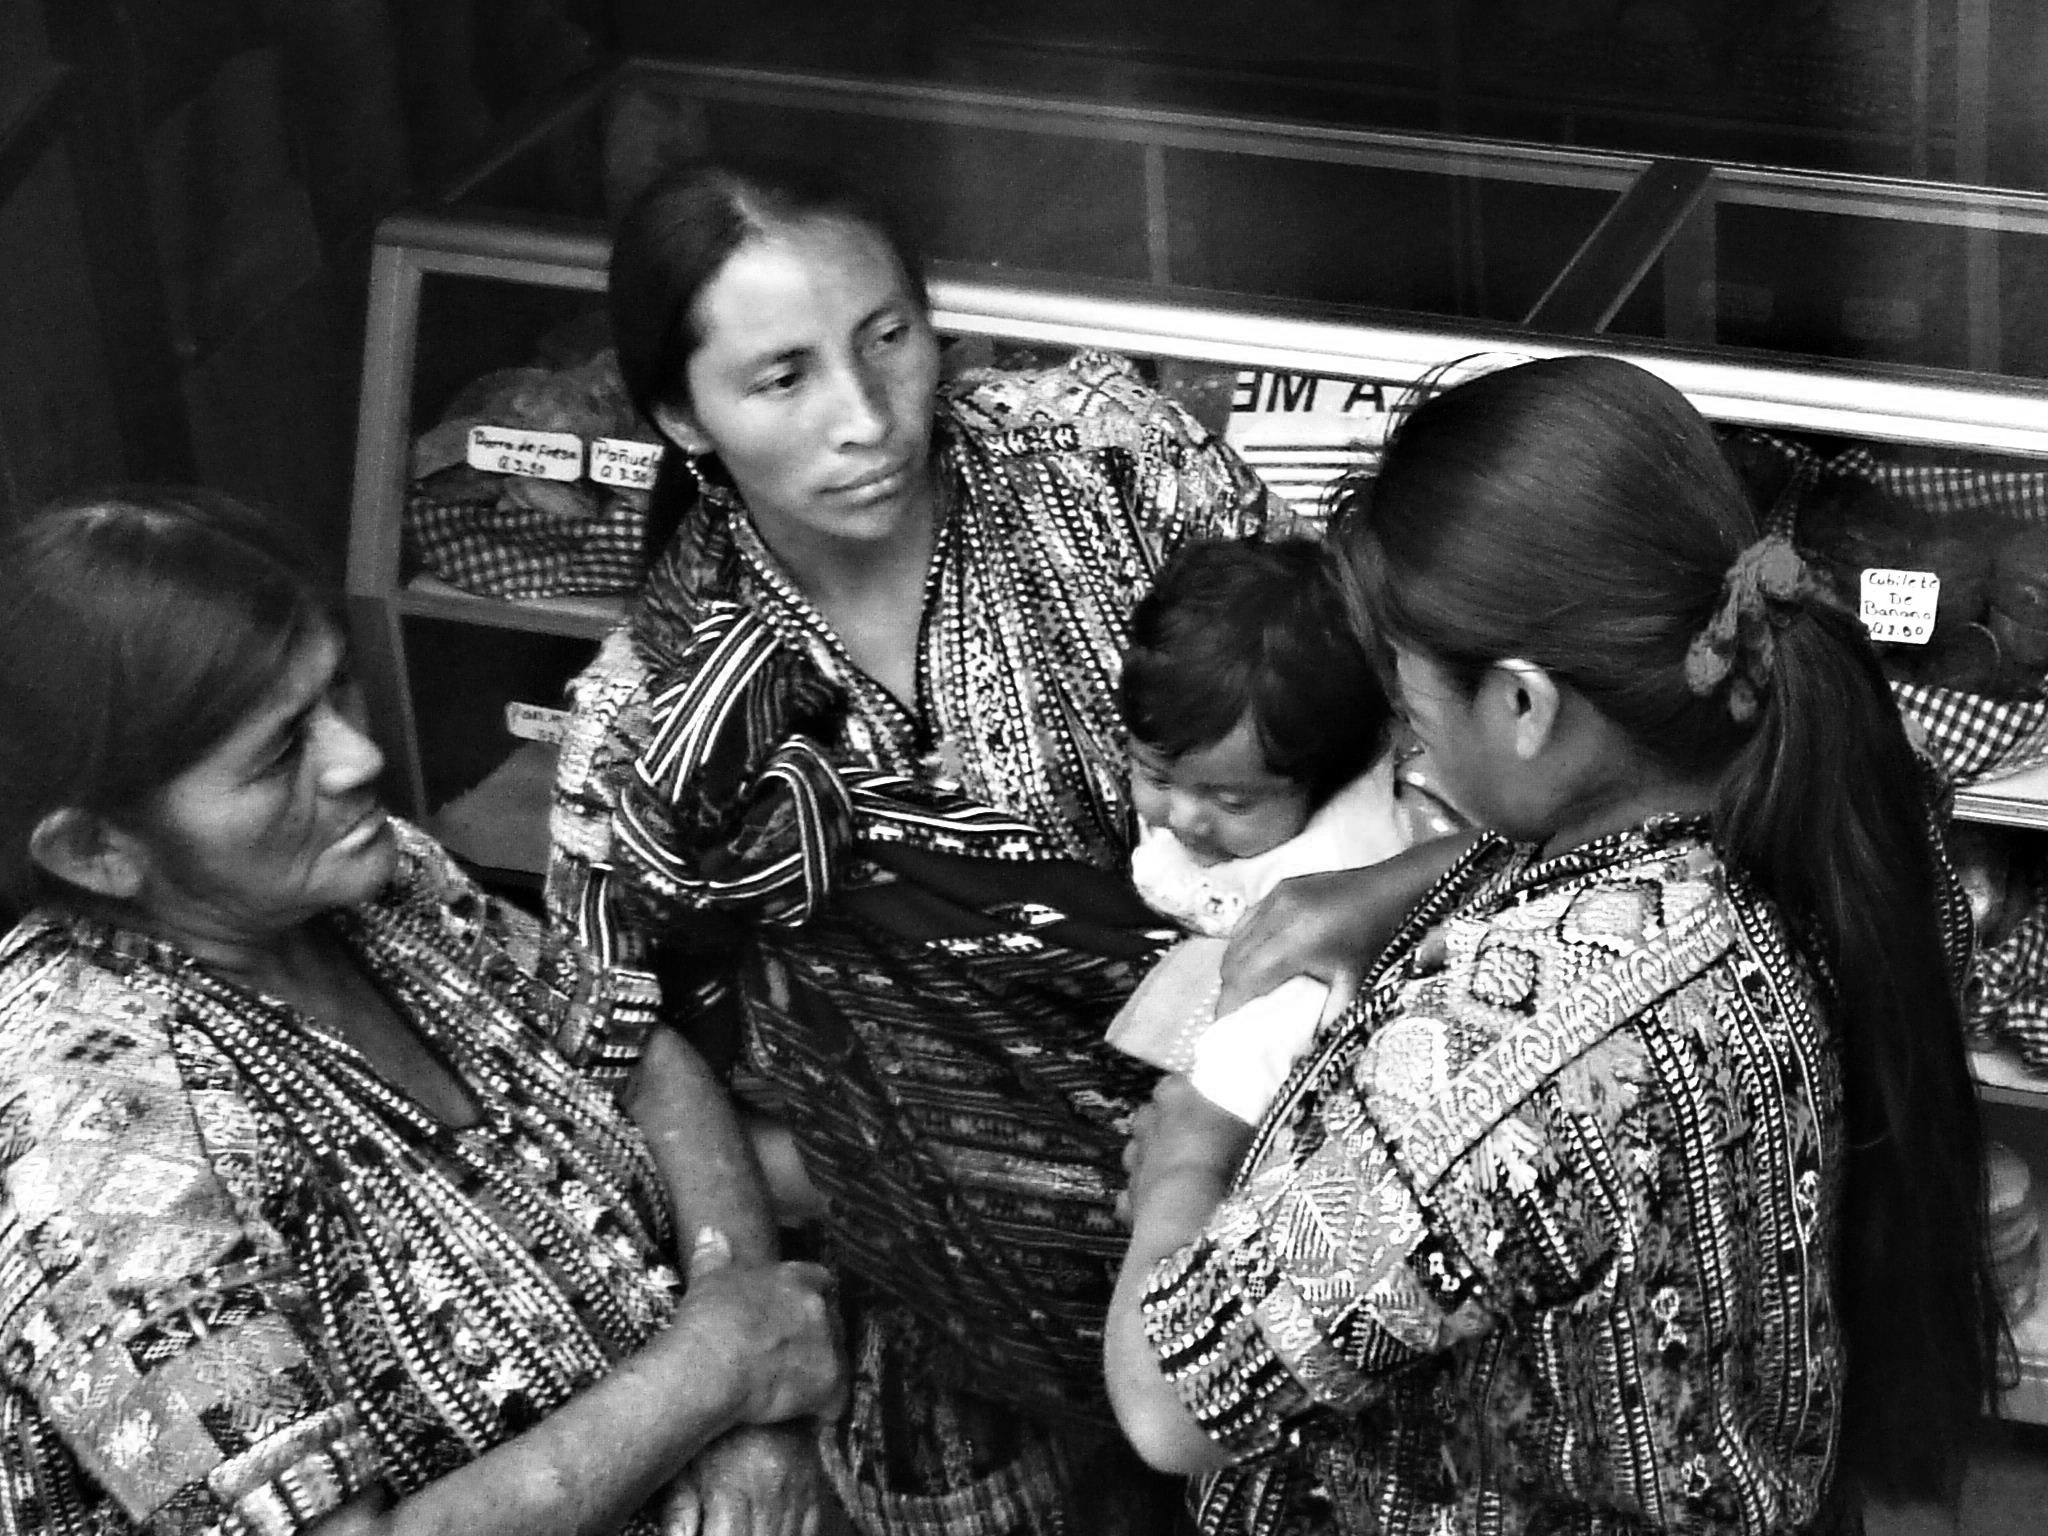 "Four generations" Guatemala